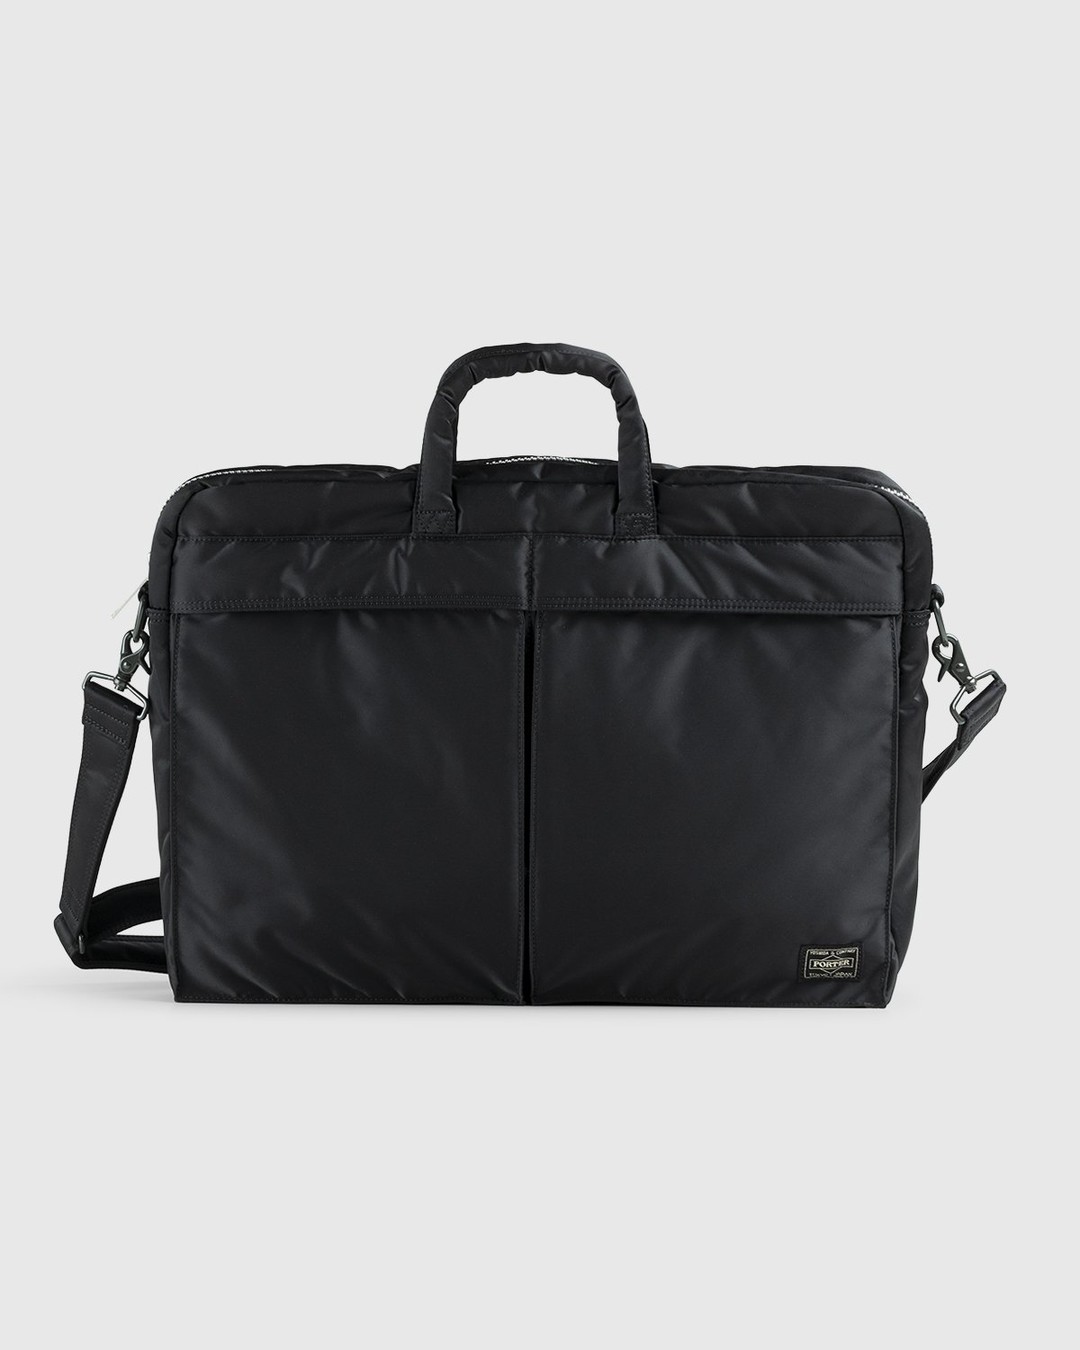 Porter-Yoshida & Co. – Tanker 2-Way Briefcase Black - Bags - Black - Image 1